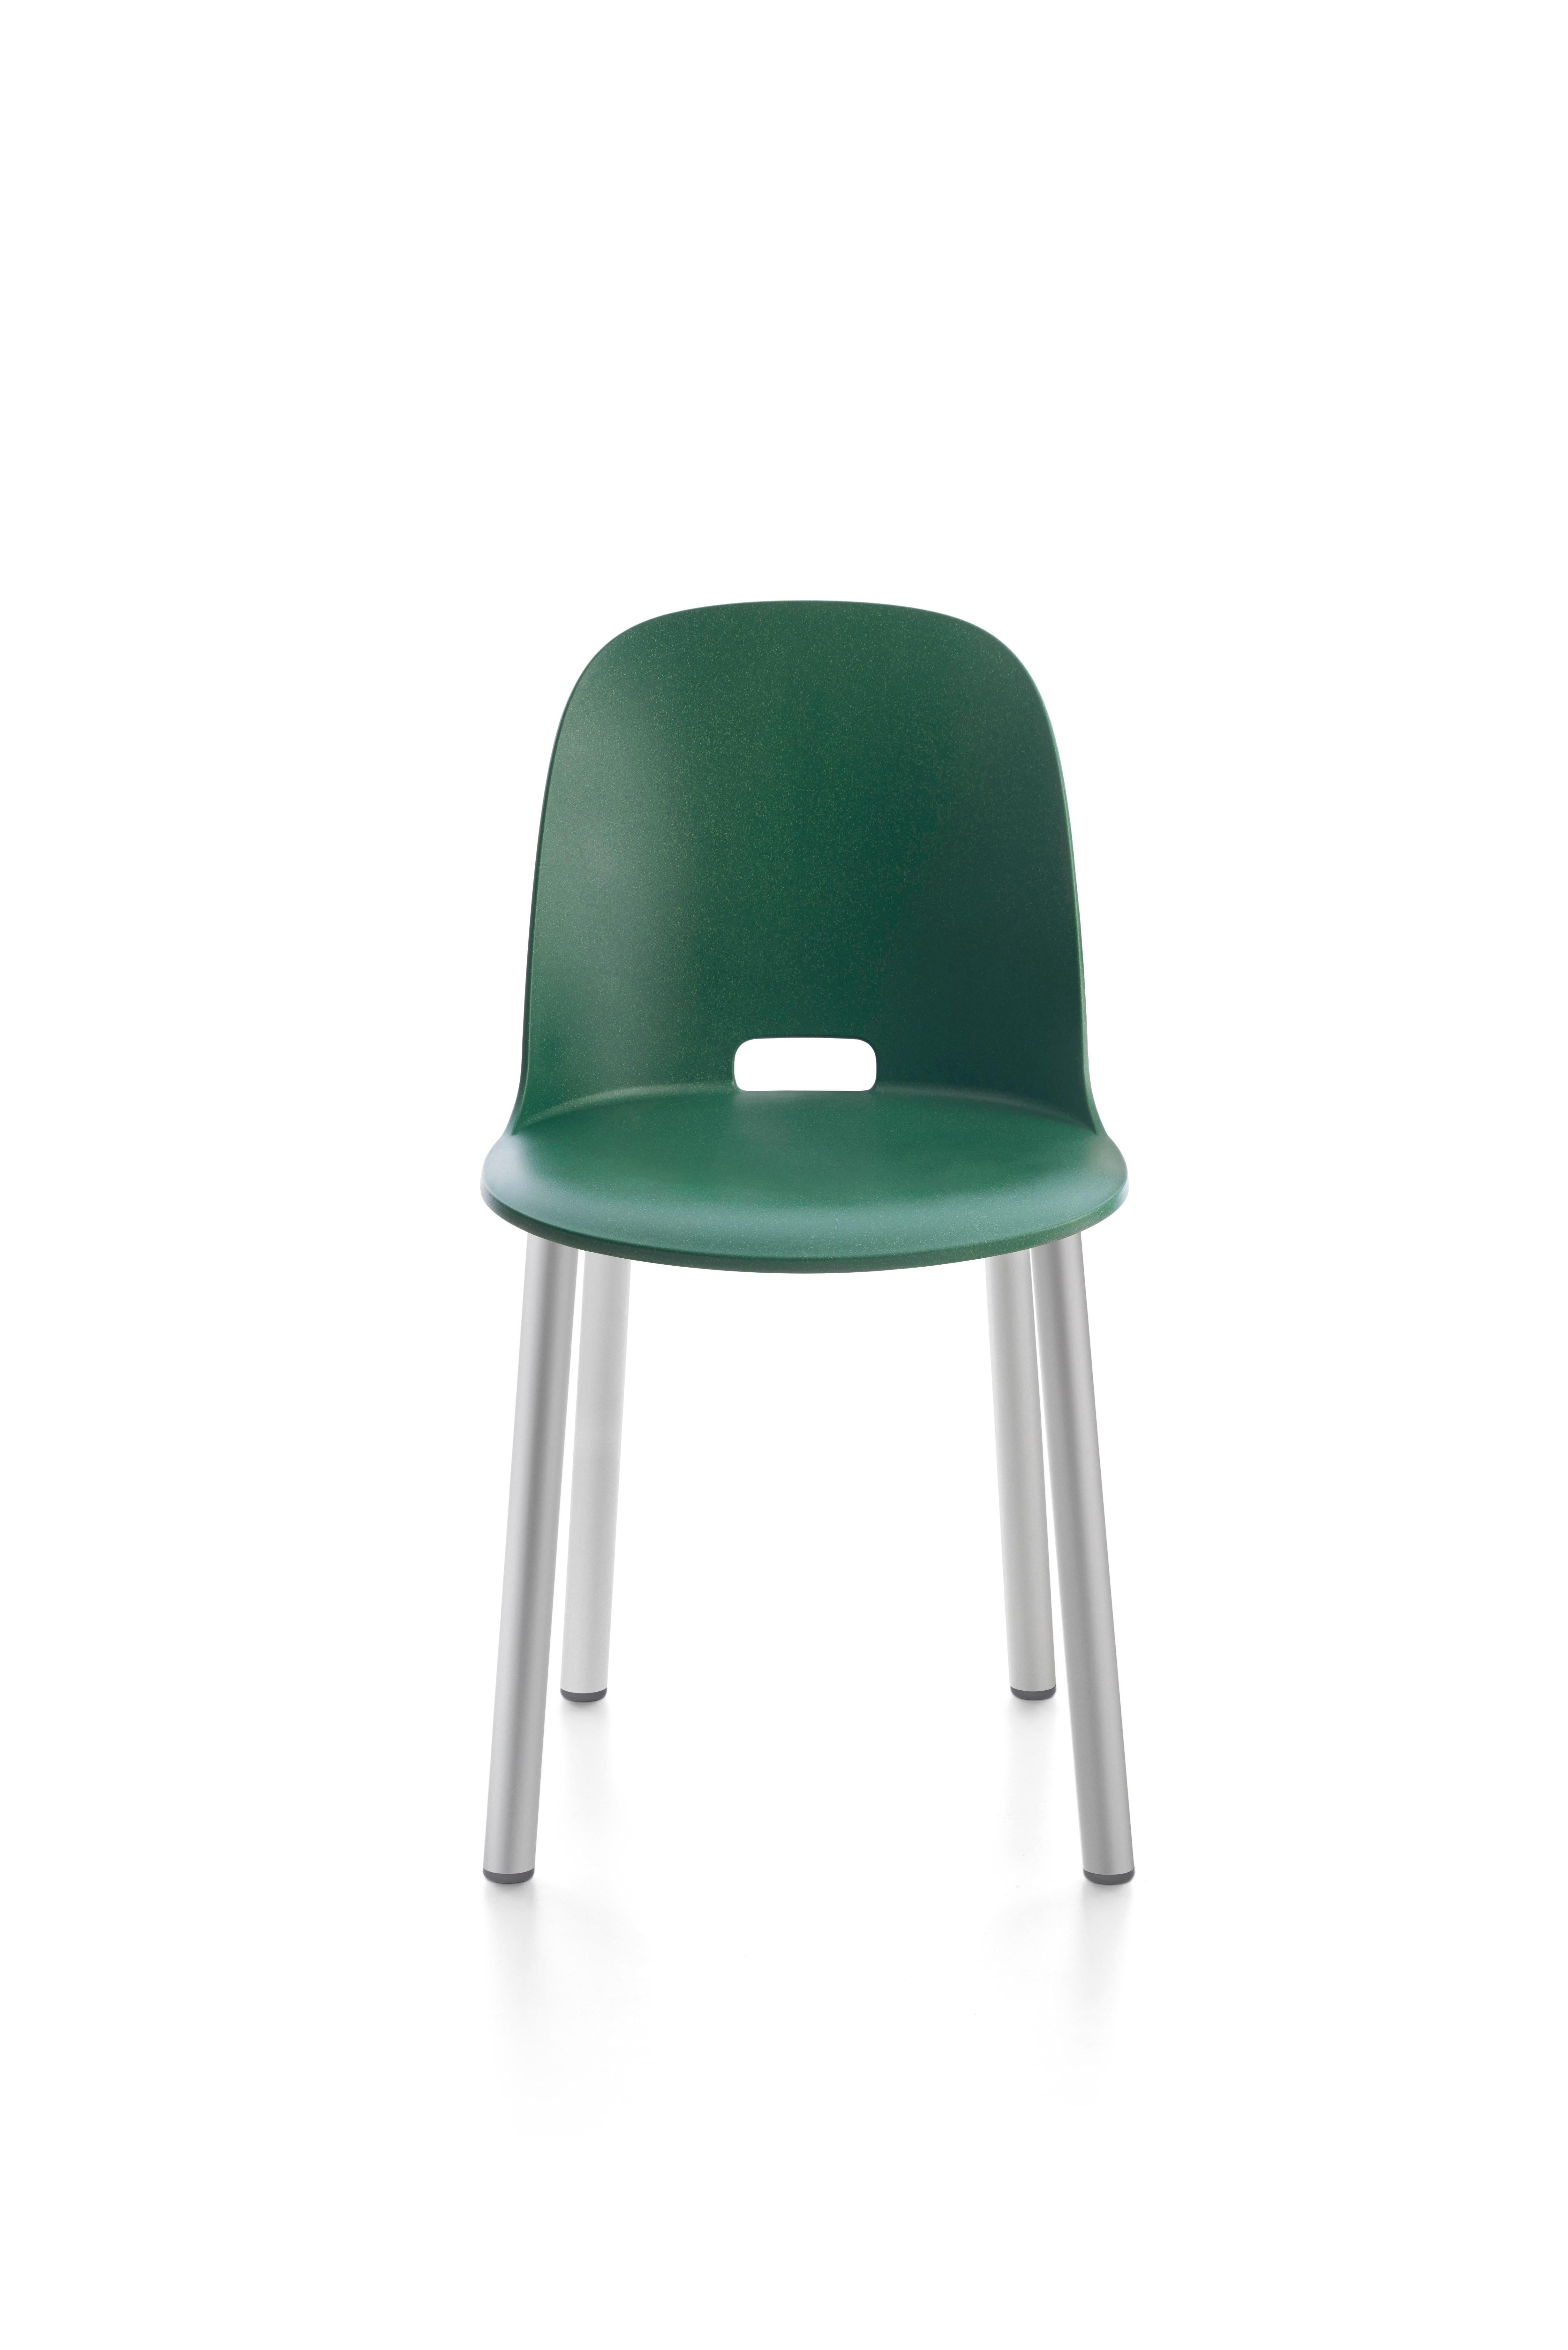 For Sale: Green (Alfi Green) Emeco Alfi High Back Chair with Aluminum Frame by Jasper Morrison